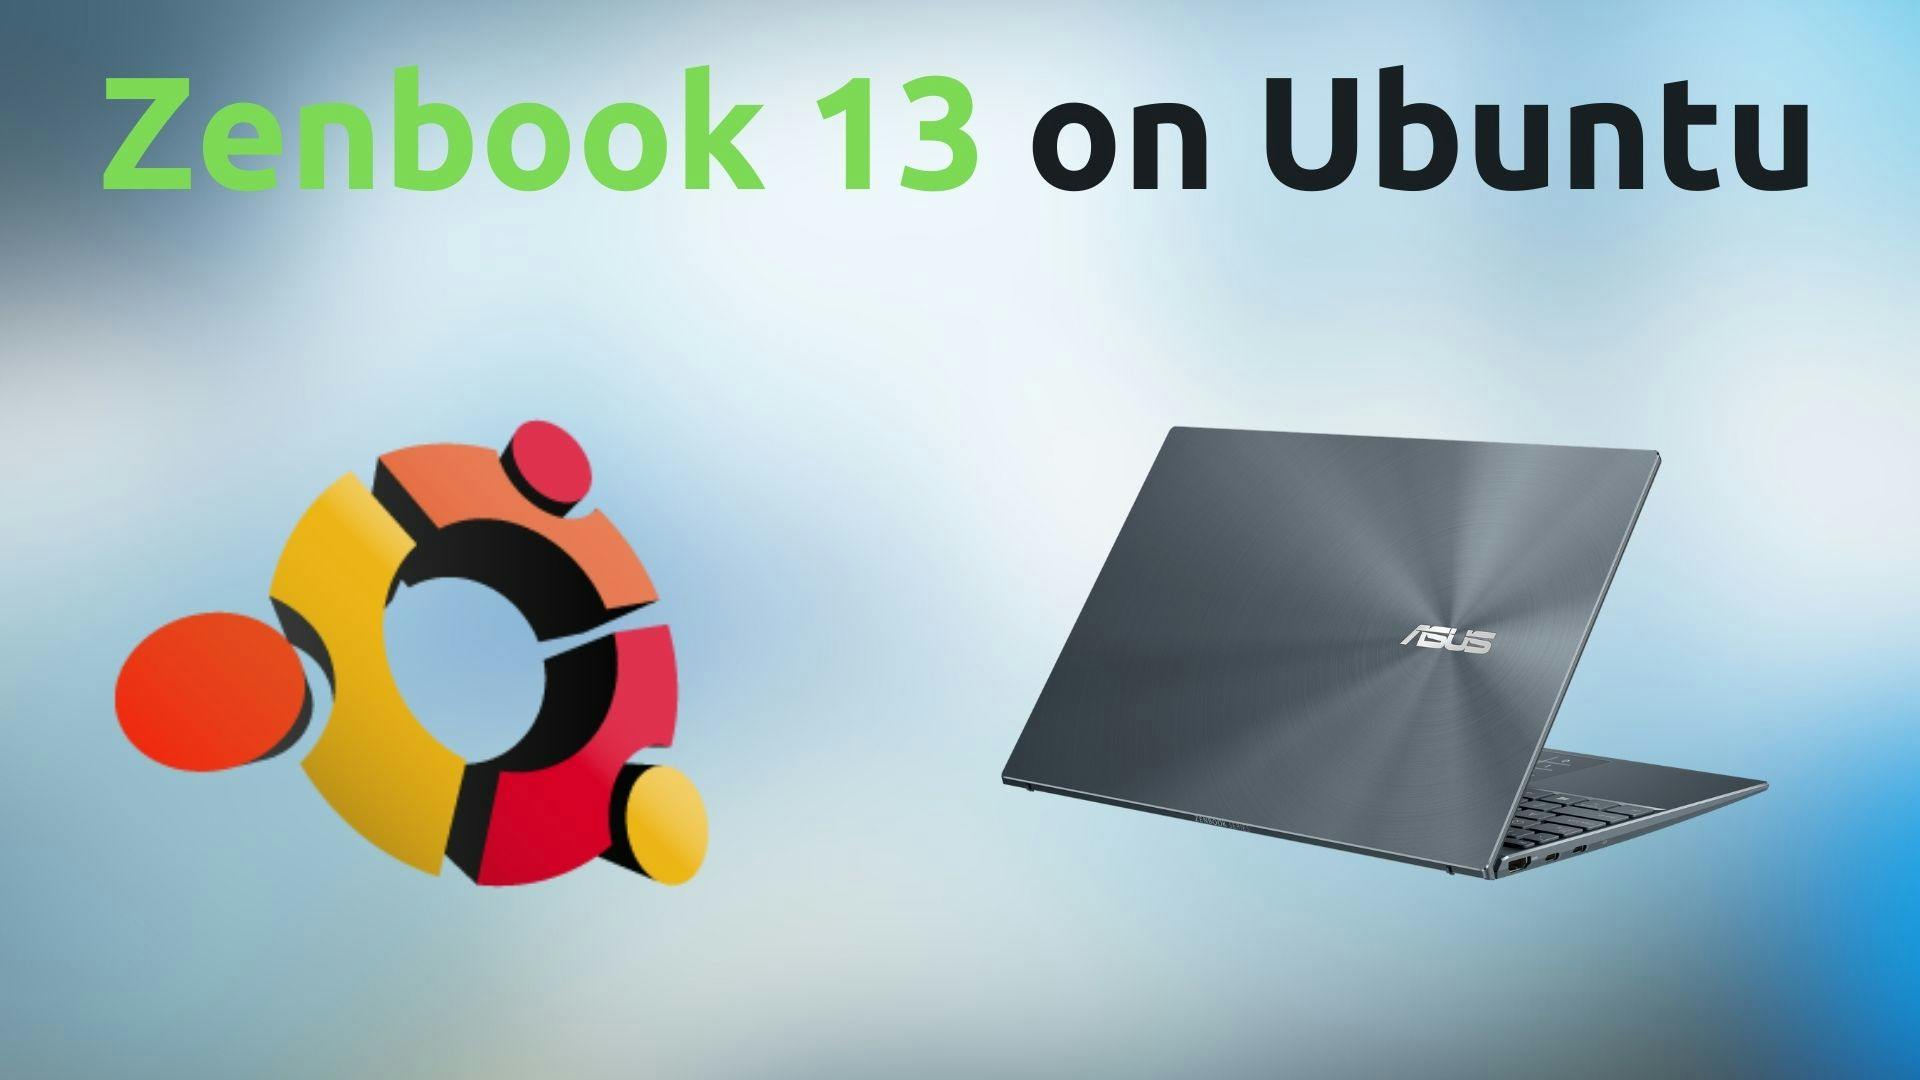 zenbook 13 and ubuntu logo